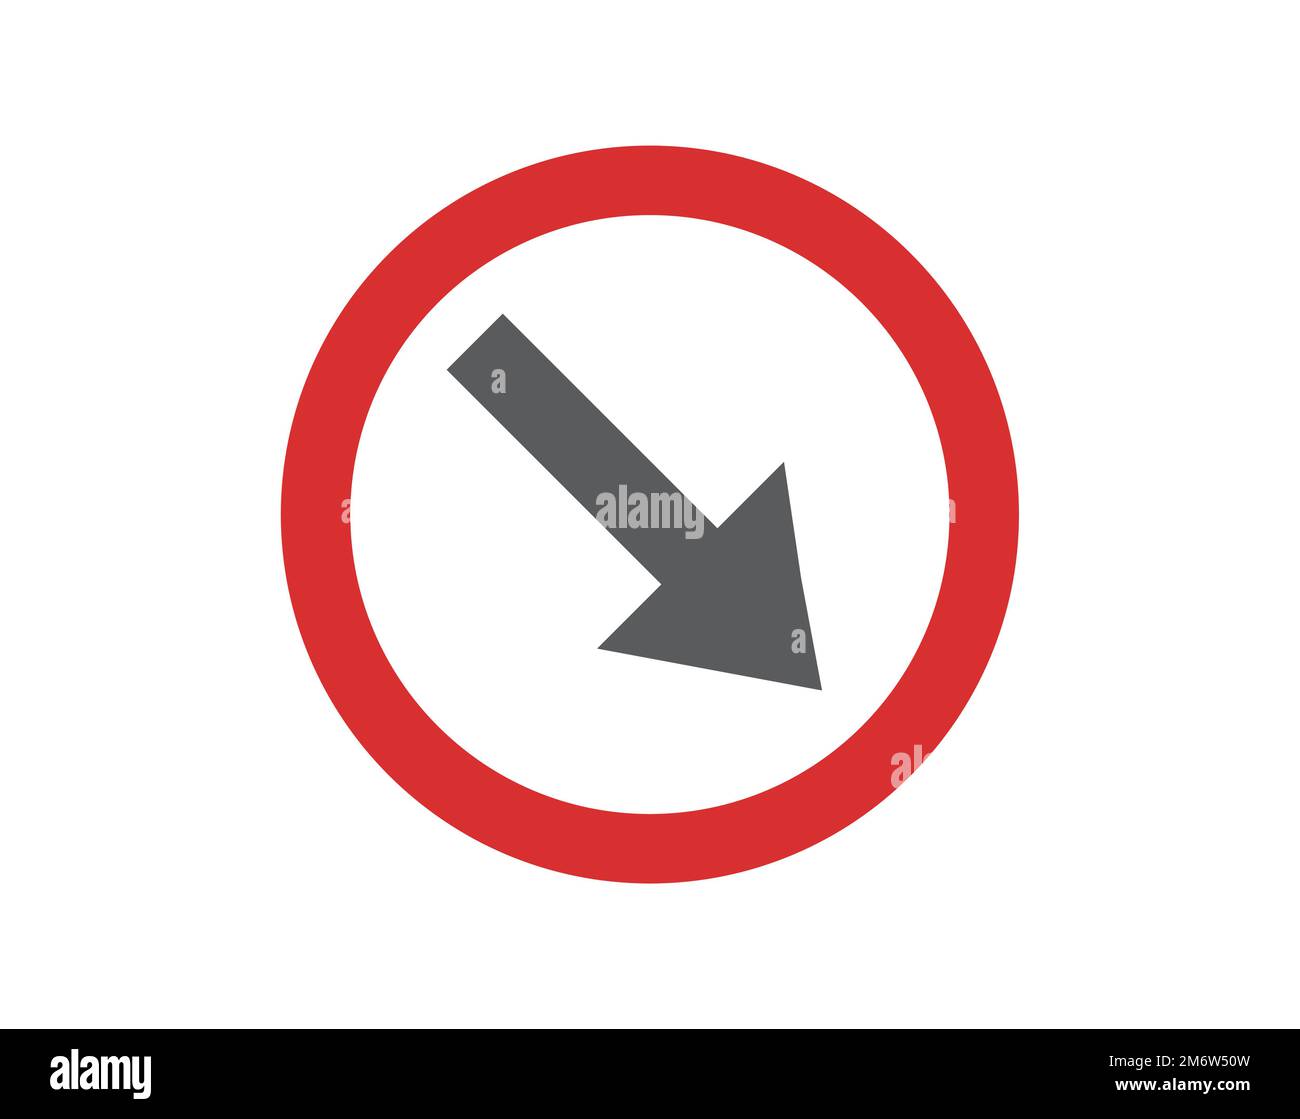 Pass on right symbol. Traffic signs vectors. Stock Vector